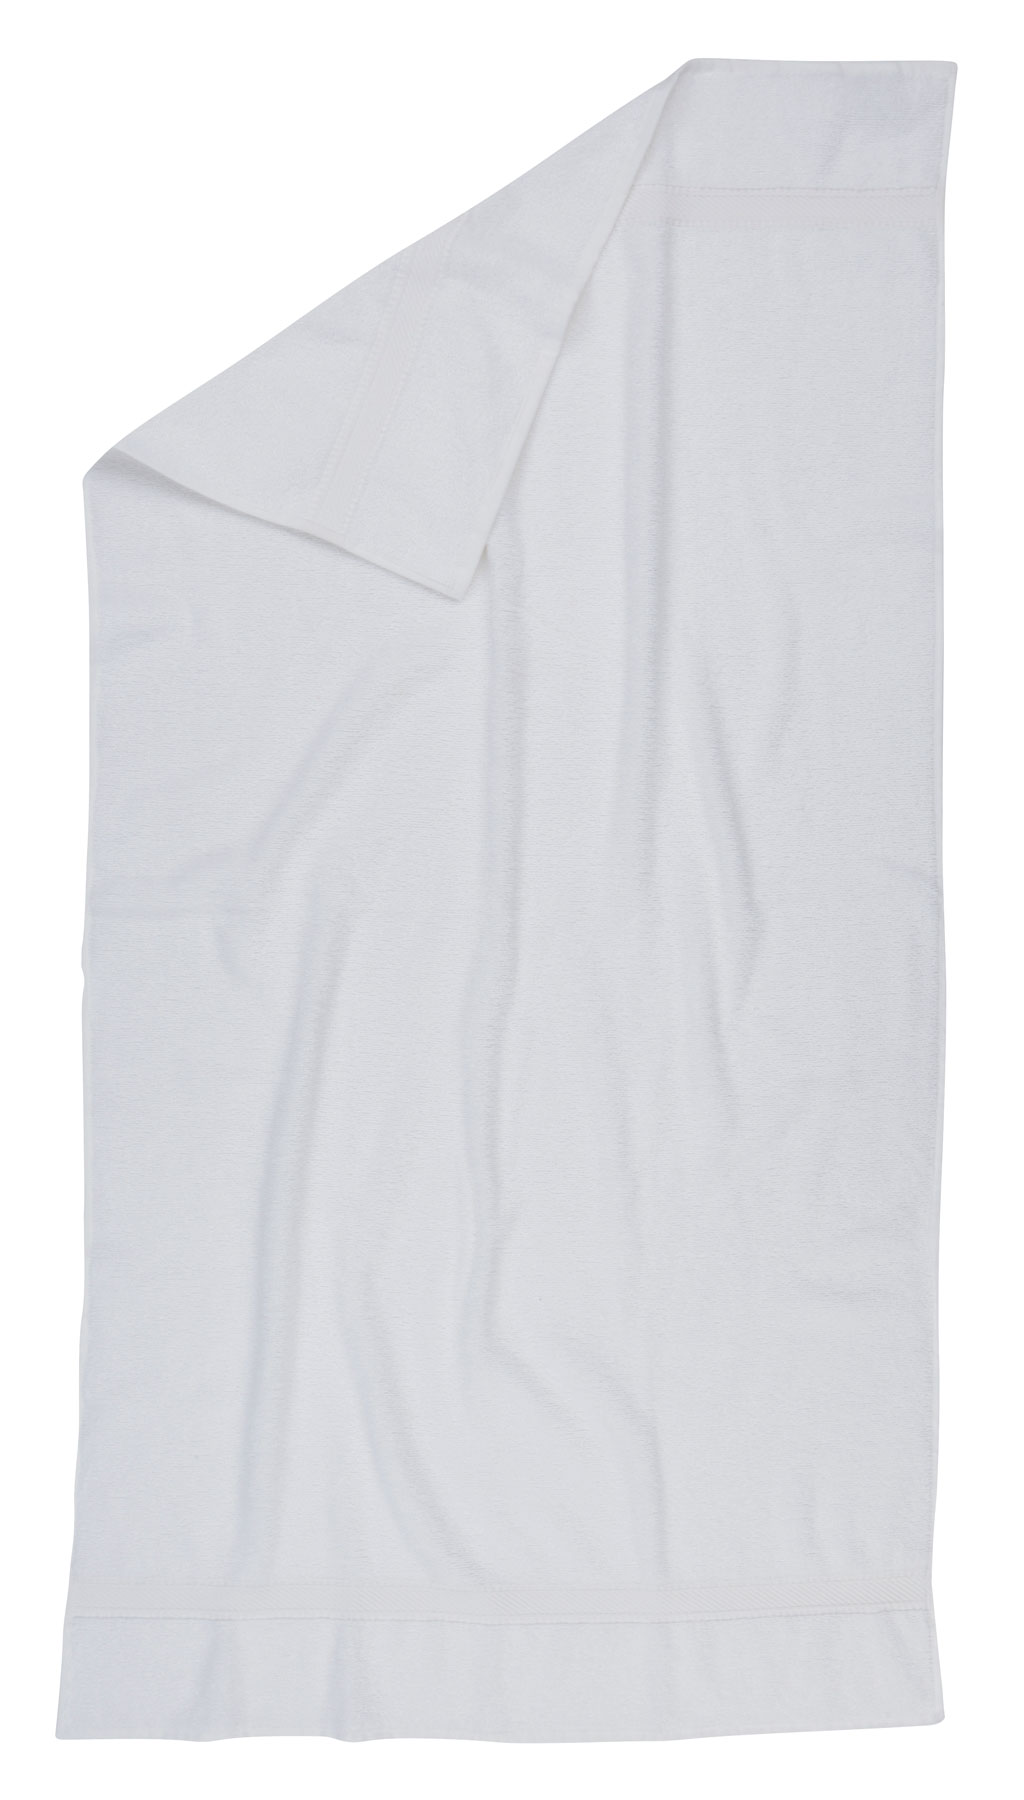 Handtuch ECO DRY - Weiß 